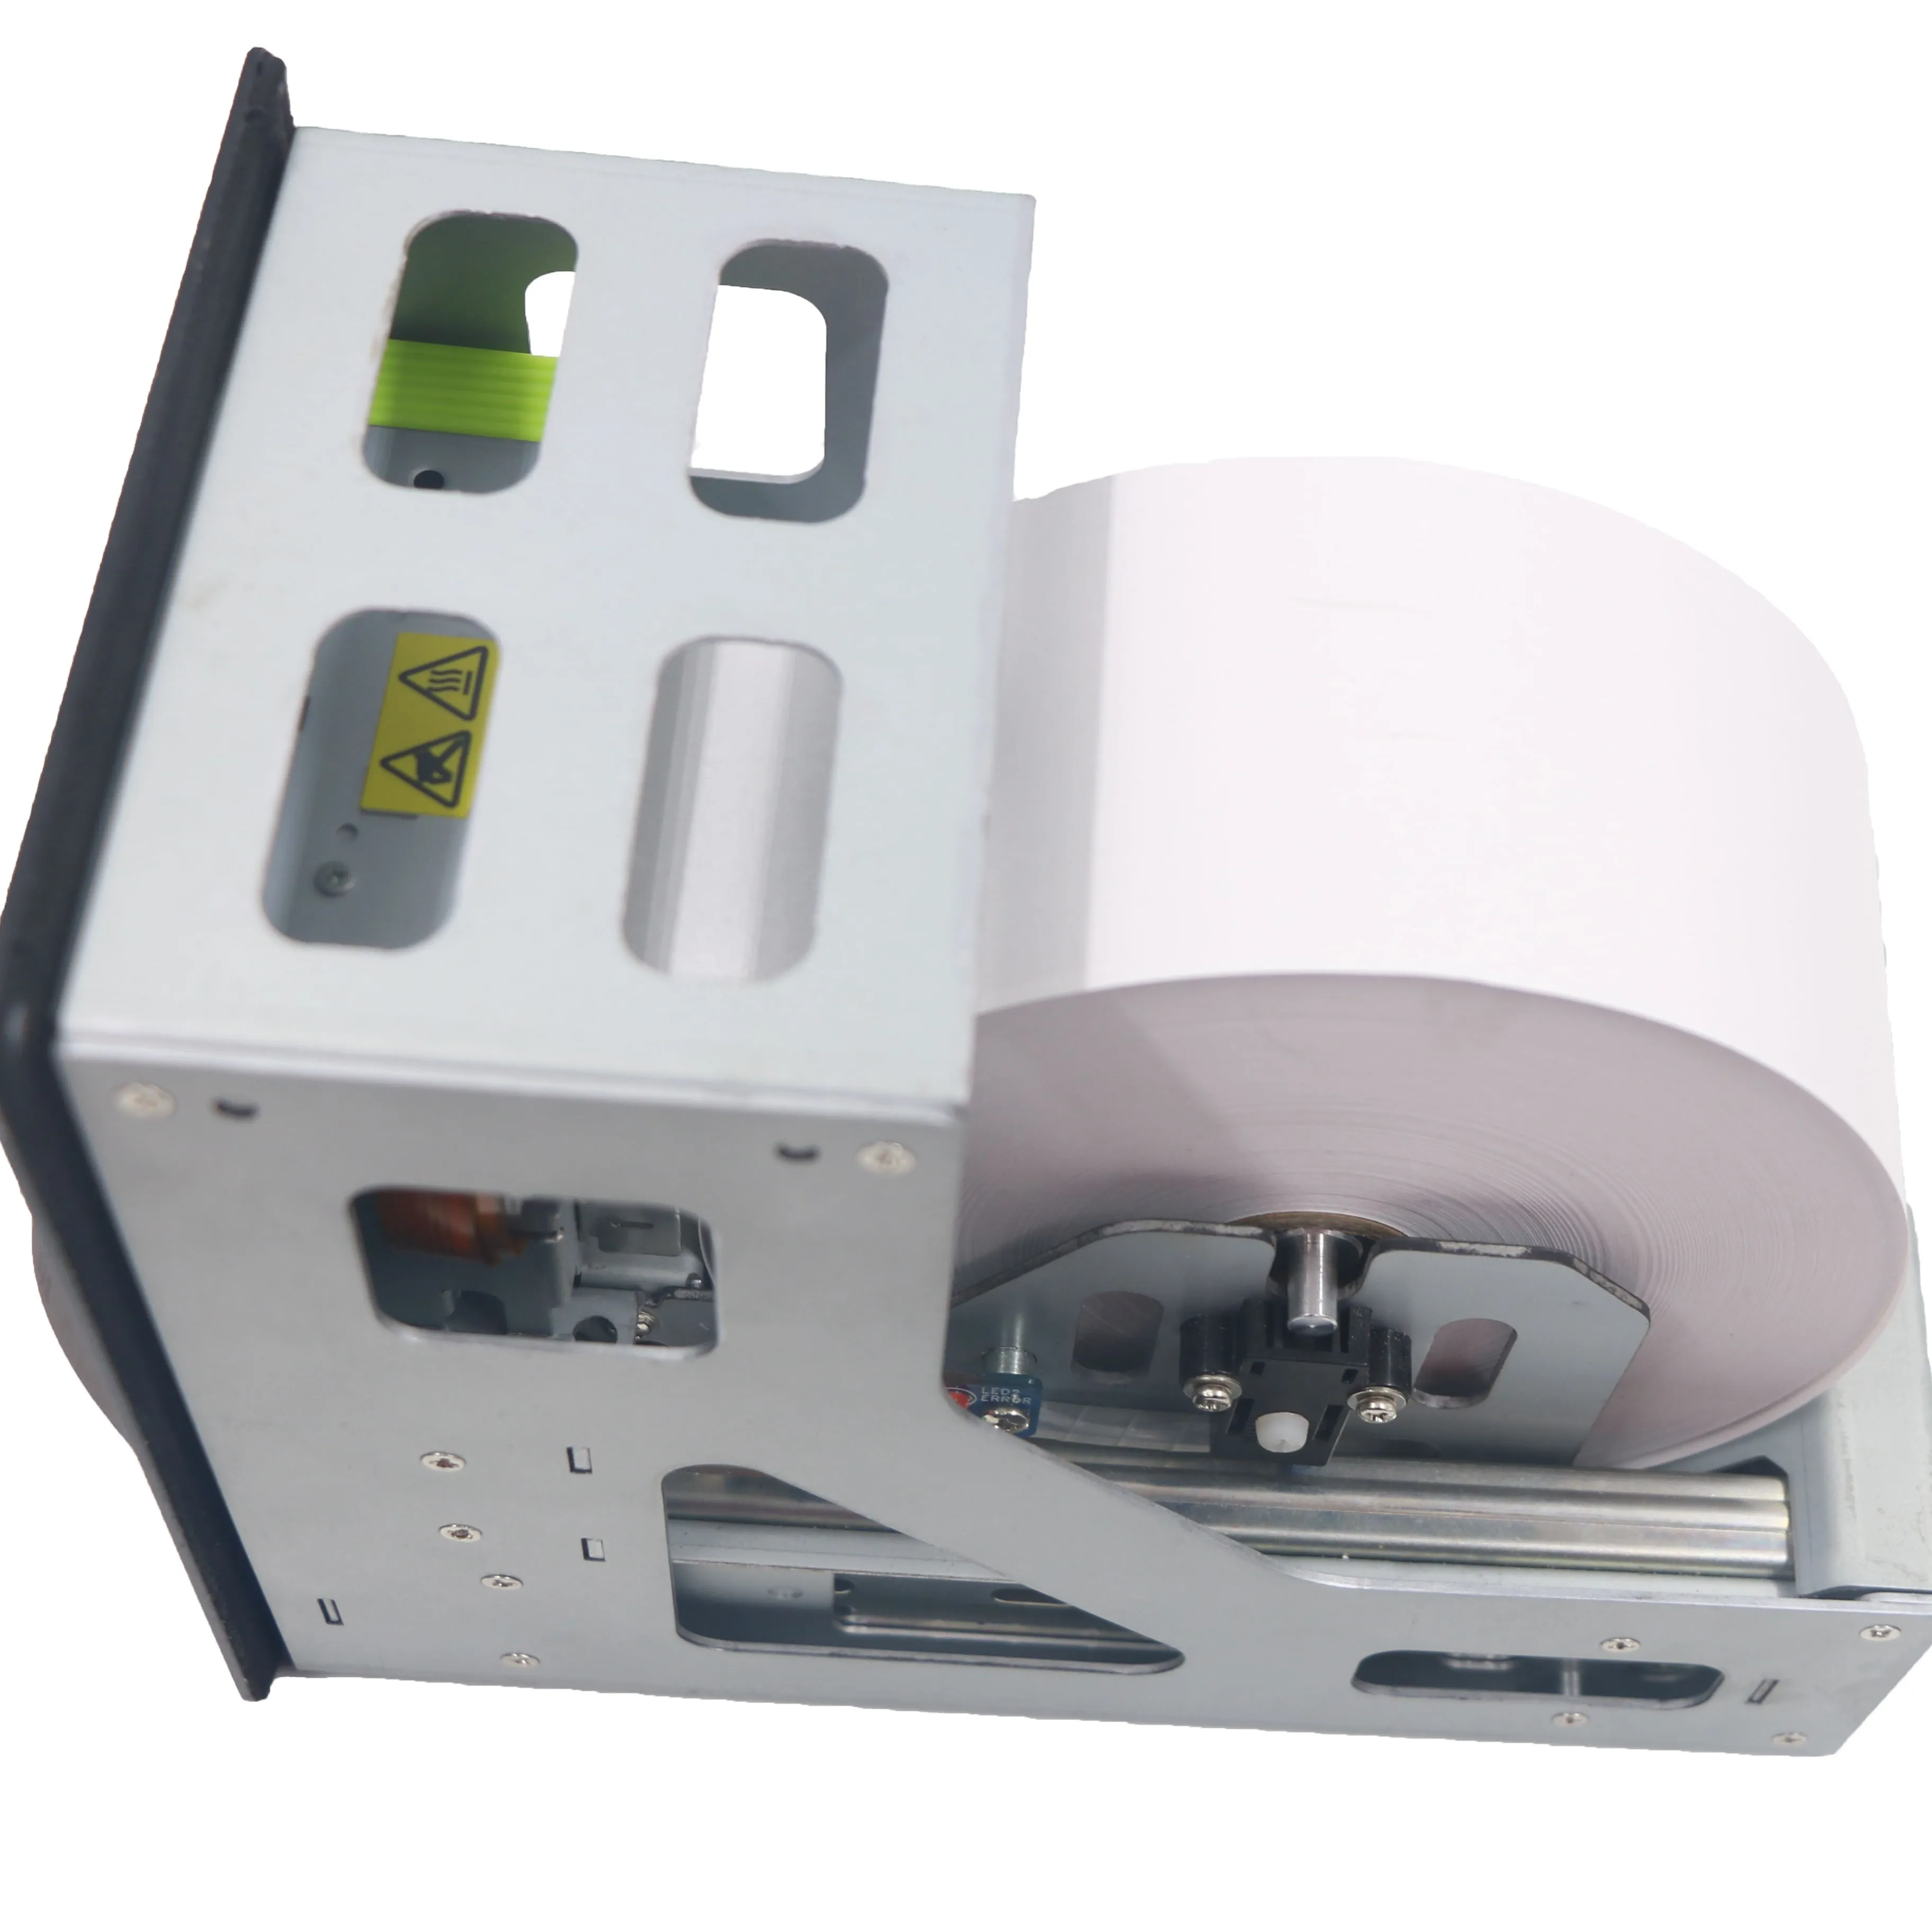 Painel de papel impressora térmica 58mm, rolo de papel grande, impressora embutida, receptor térmico, etiqueta, códigos de barras, impressora kiosk